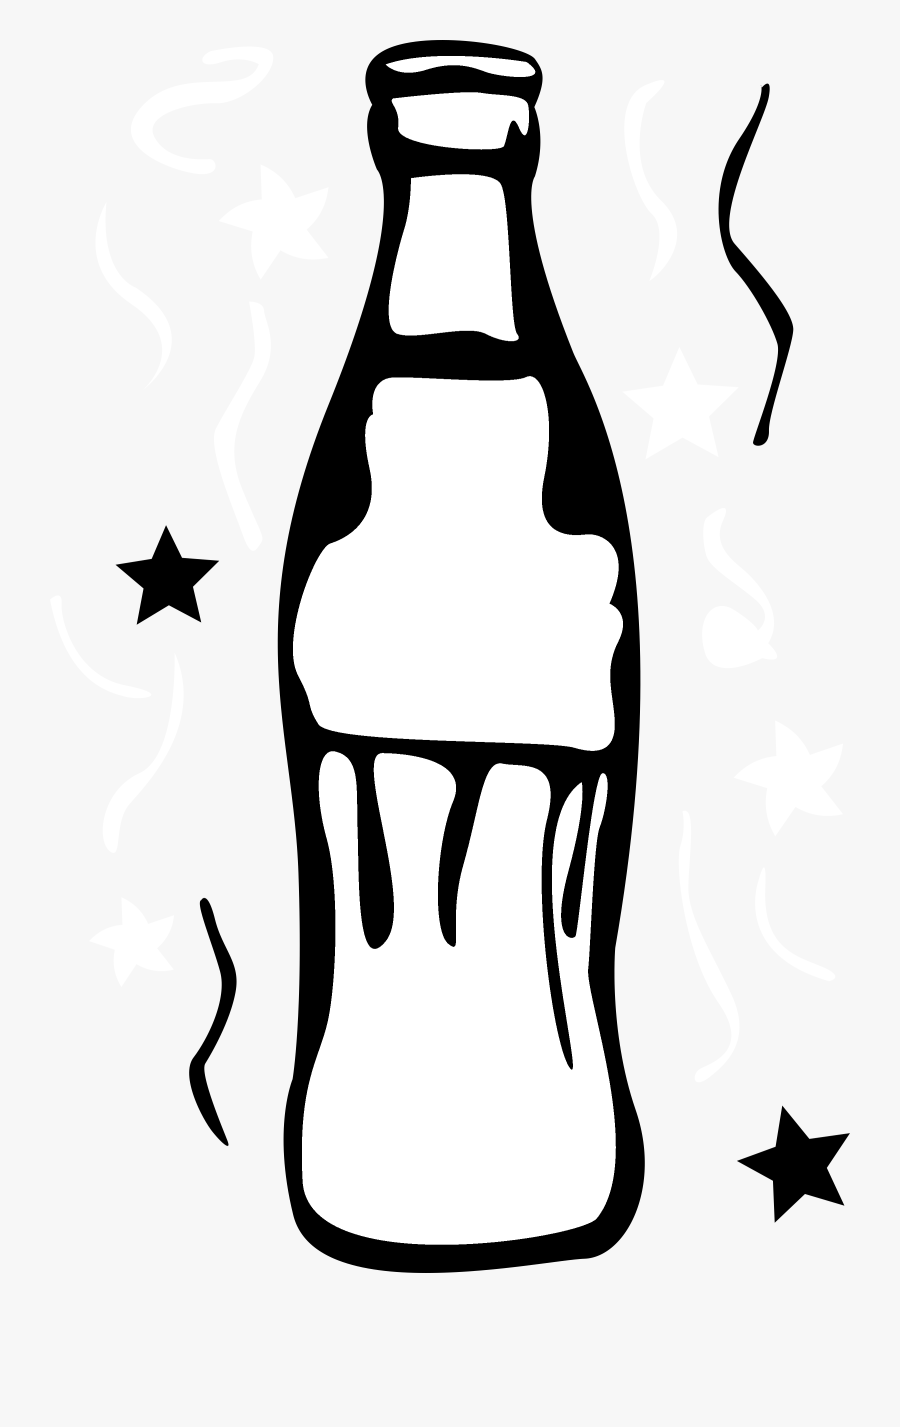 Coca Cola Clipart Black And White - Coca Cola Logos Png, Transparent Clipart